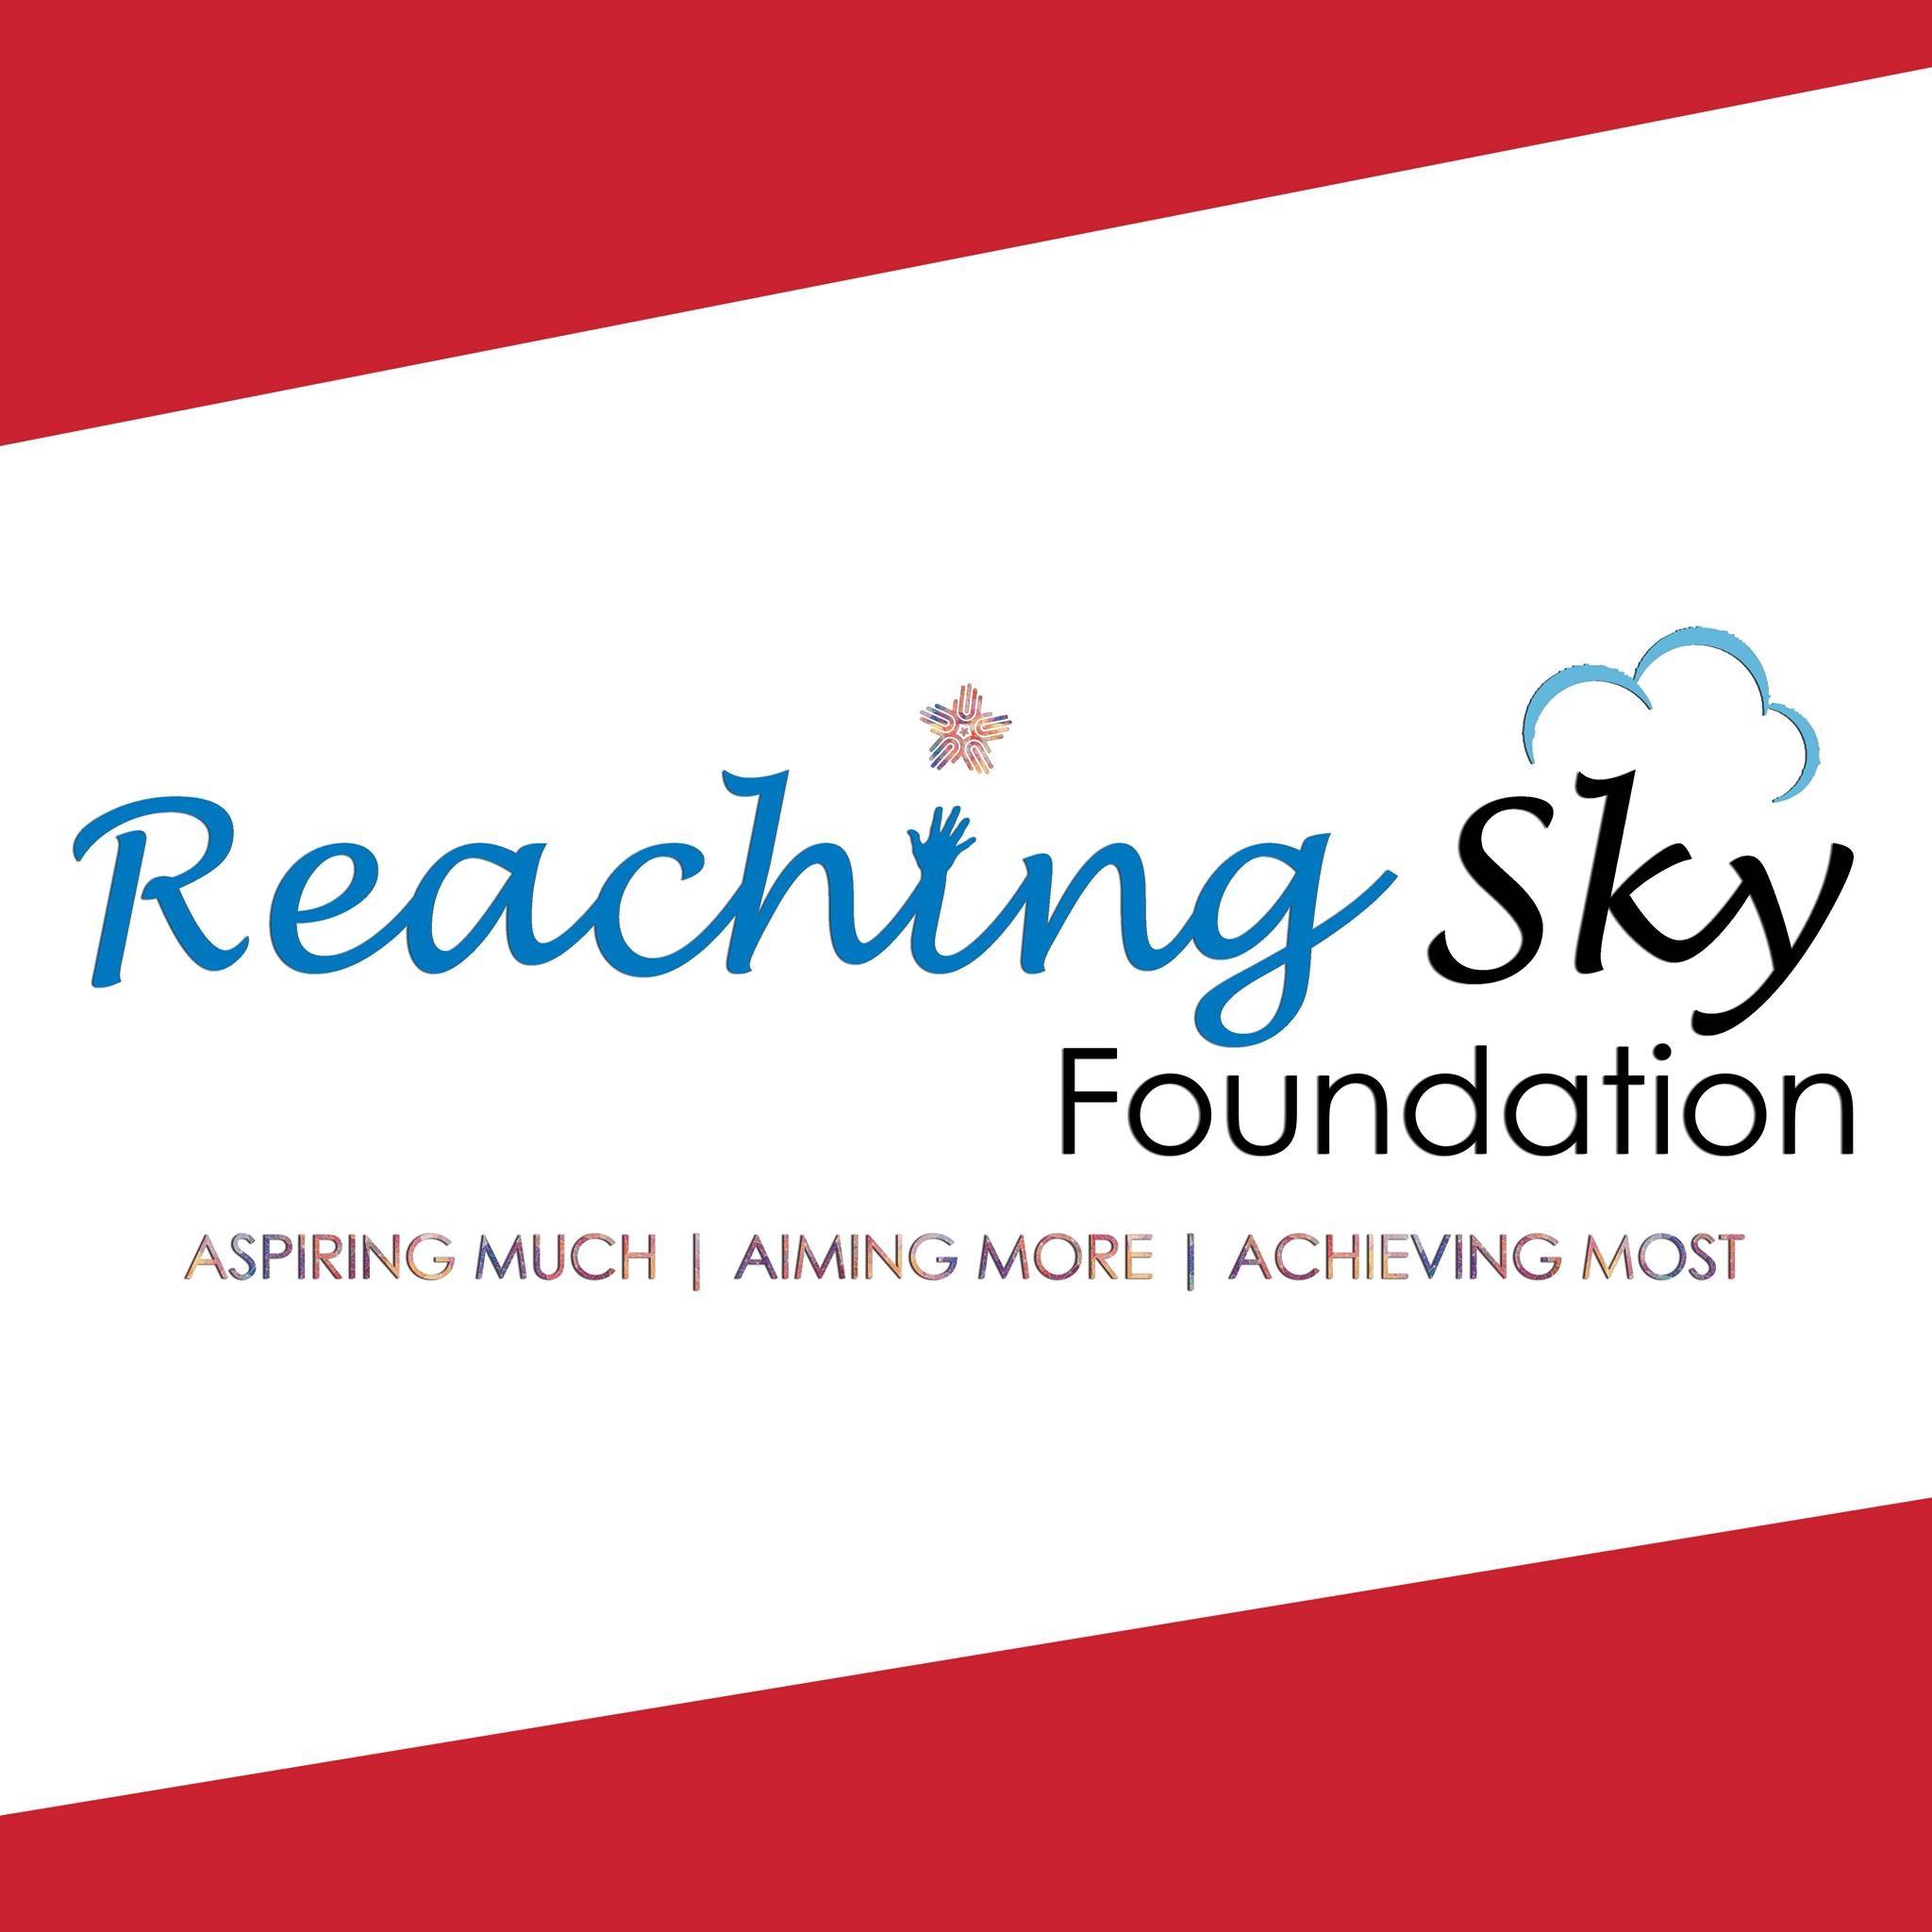 Reaching Sky Foundation